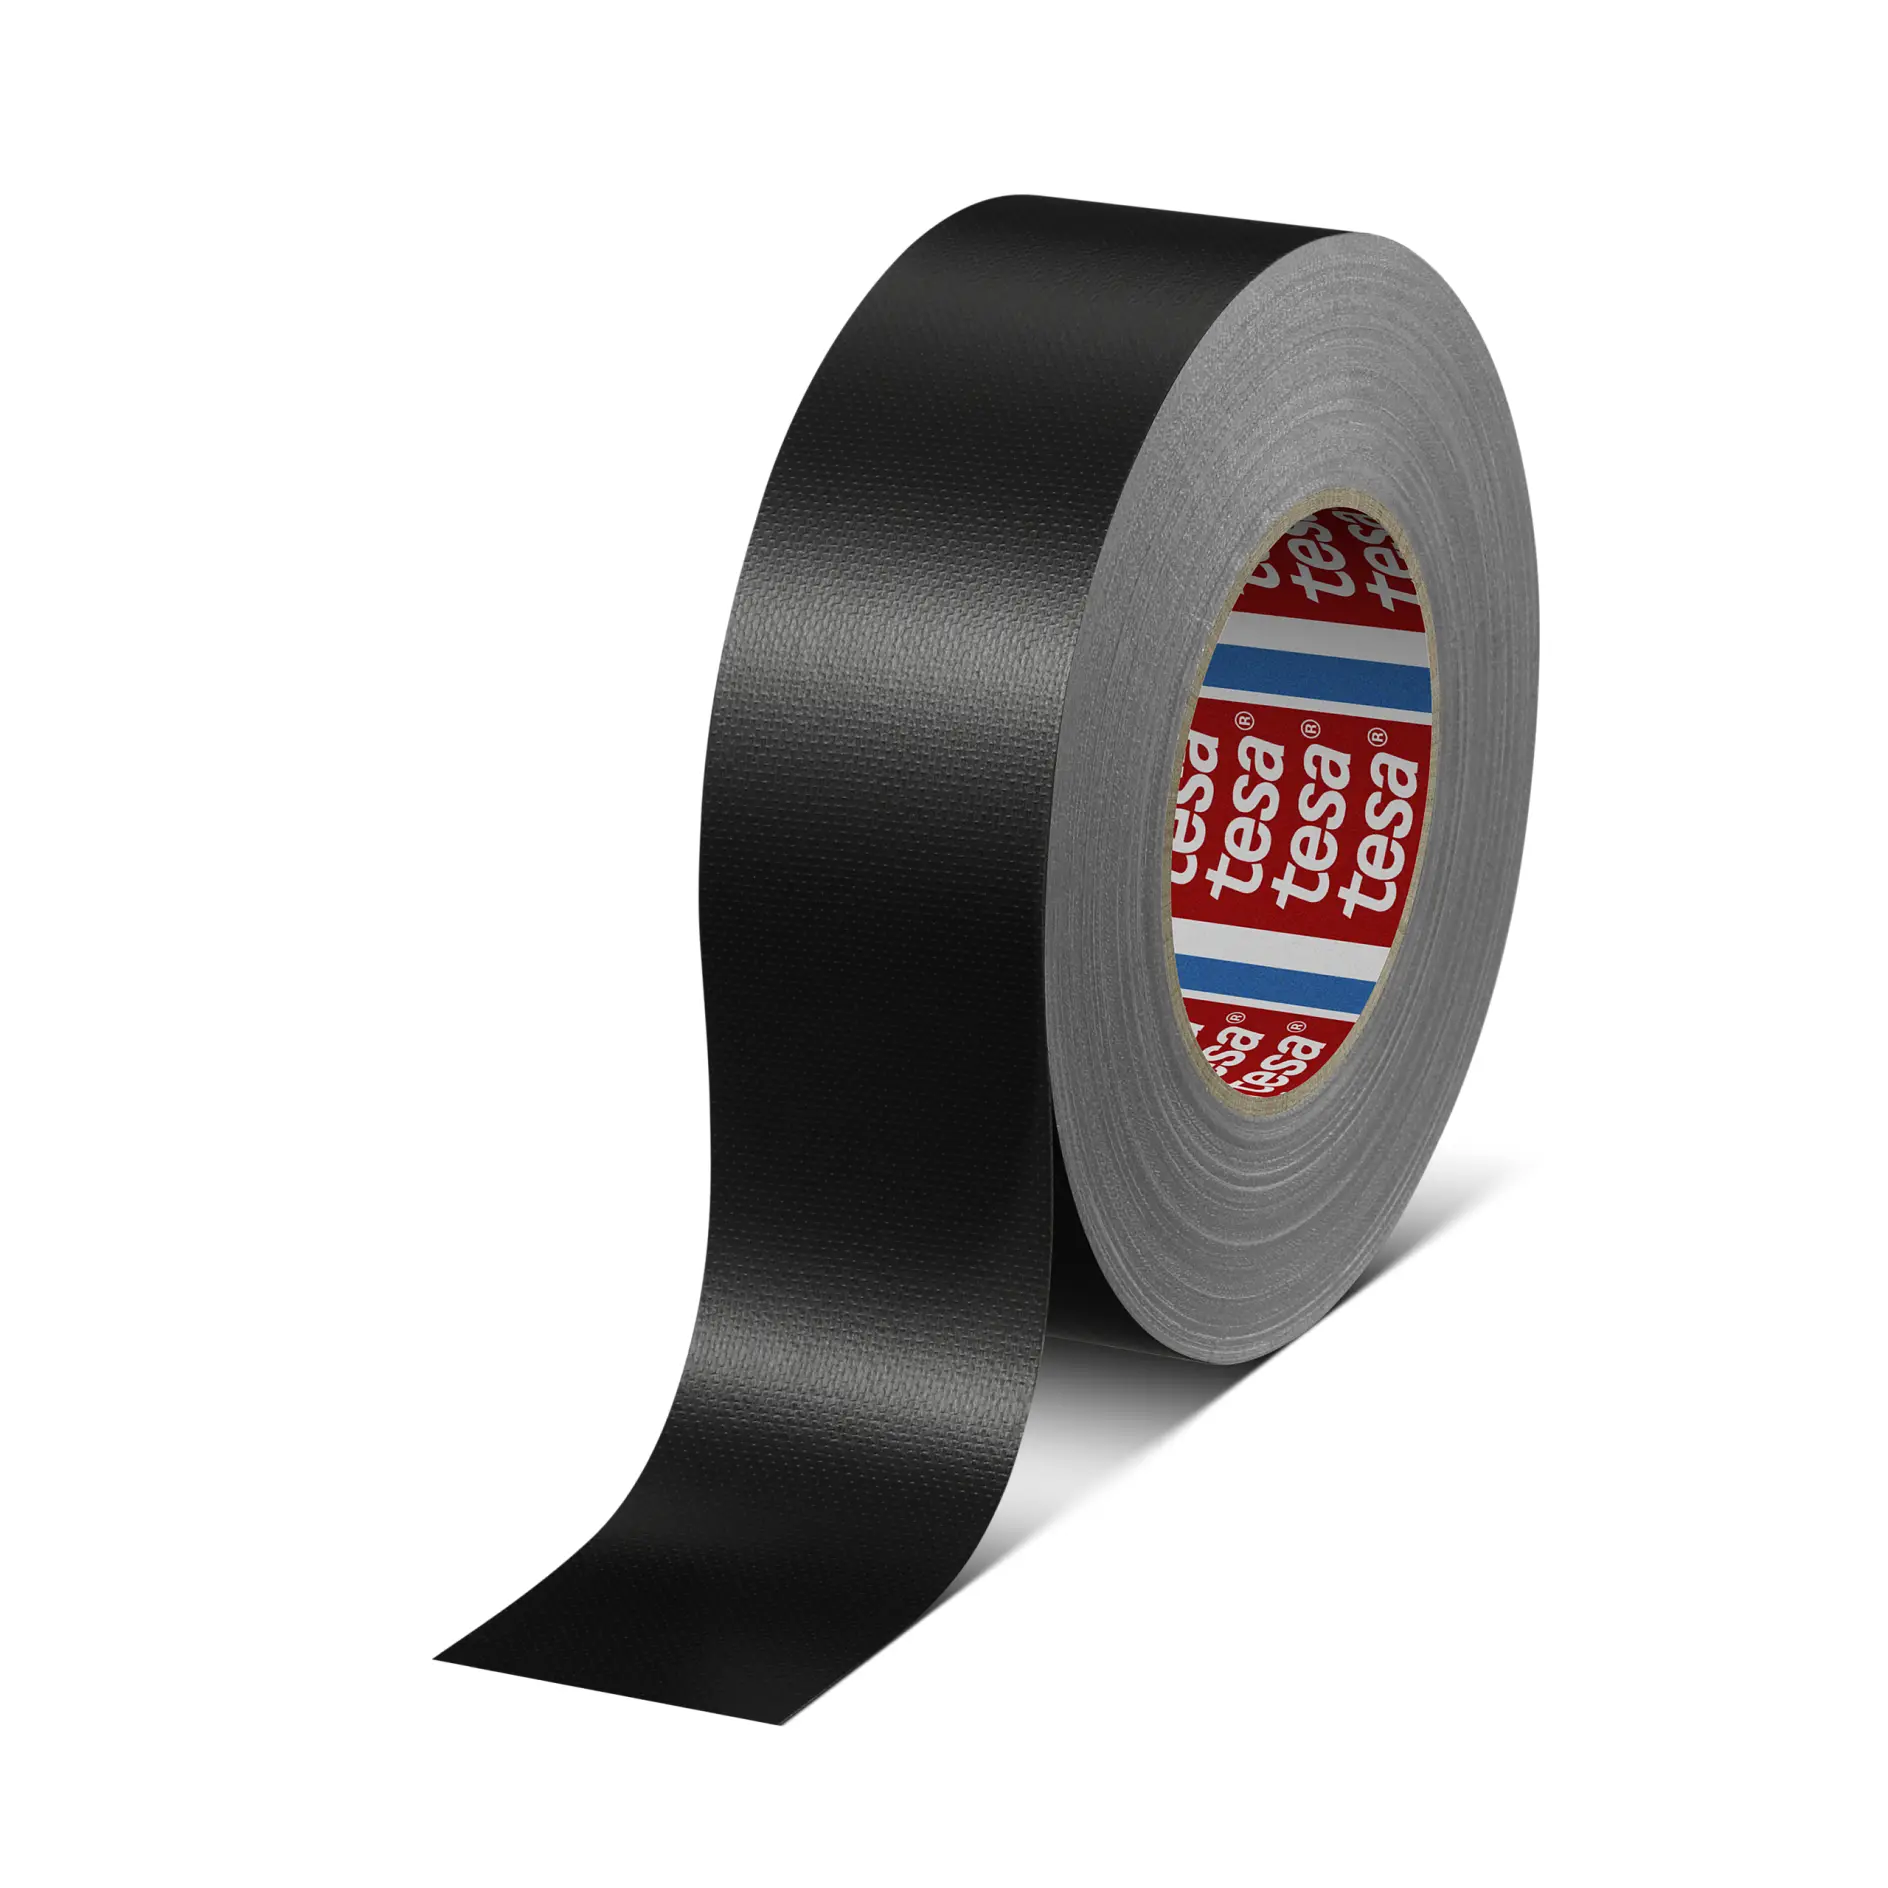 tesa-4688-standard-polyethylene-cloth-tape-black-046880000000-pr